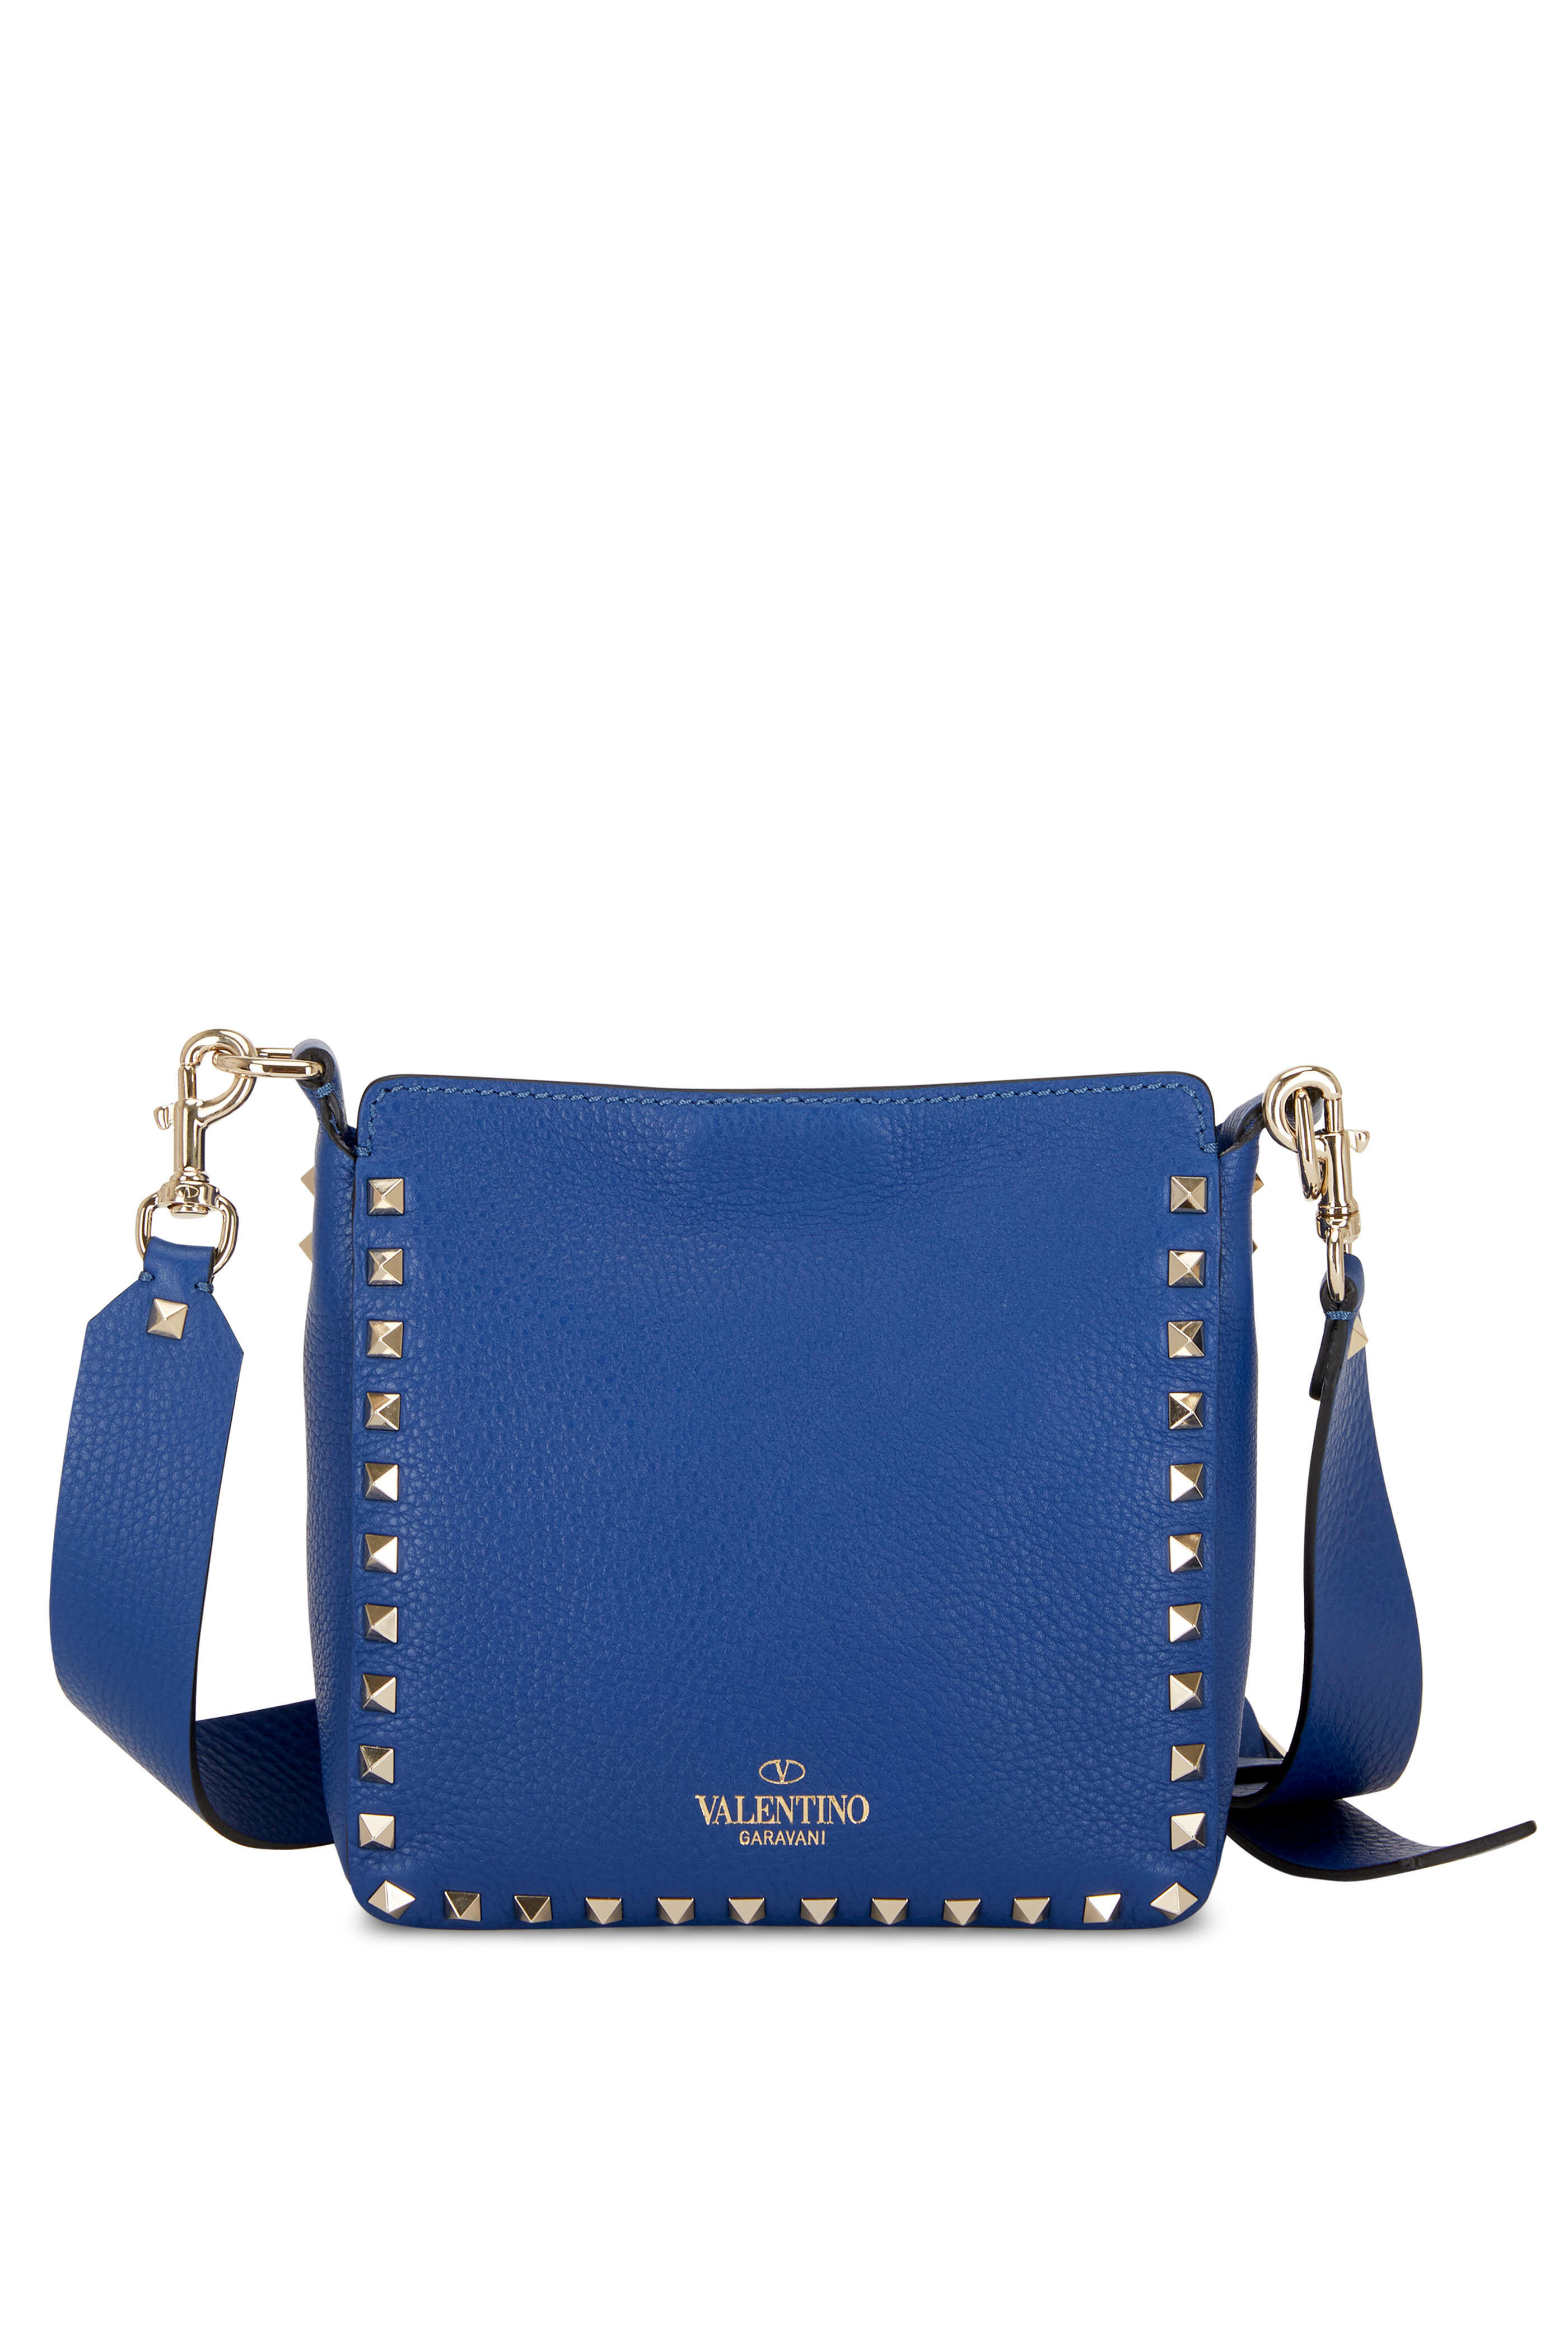 Valentino Garavani: Blue Small Rockstud Bag